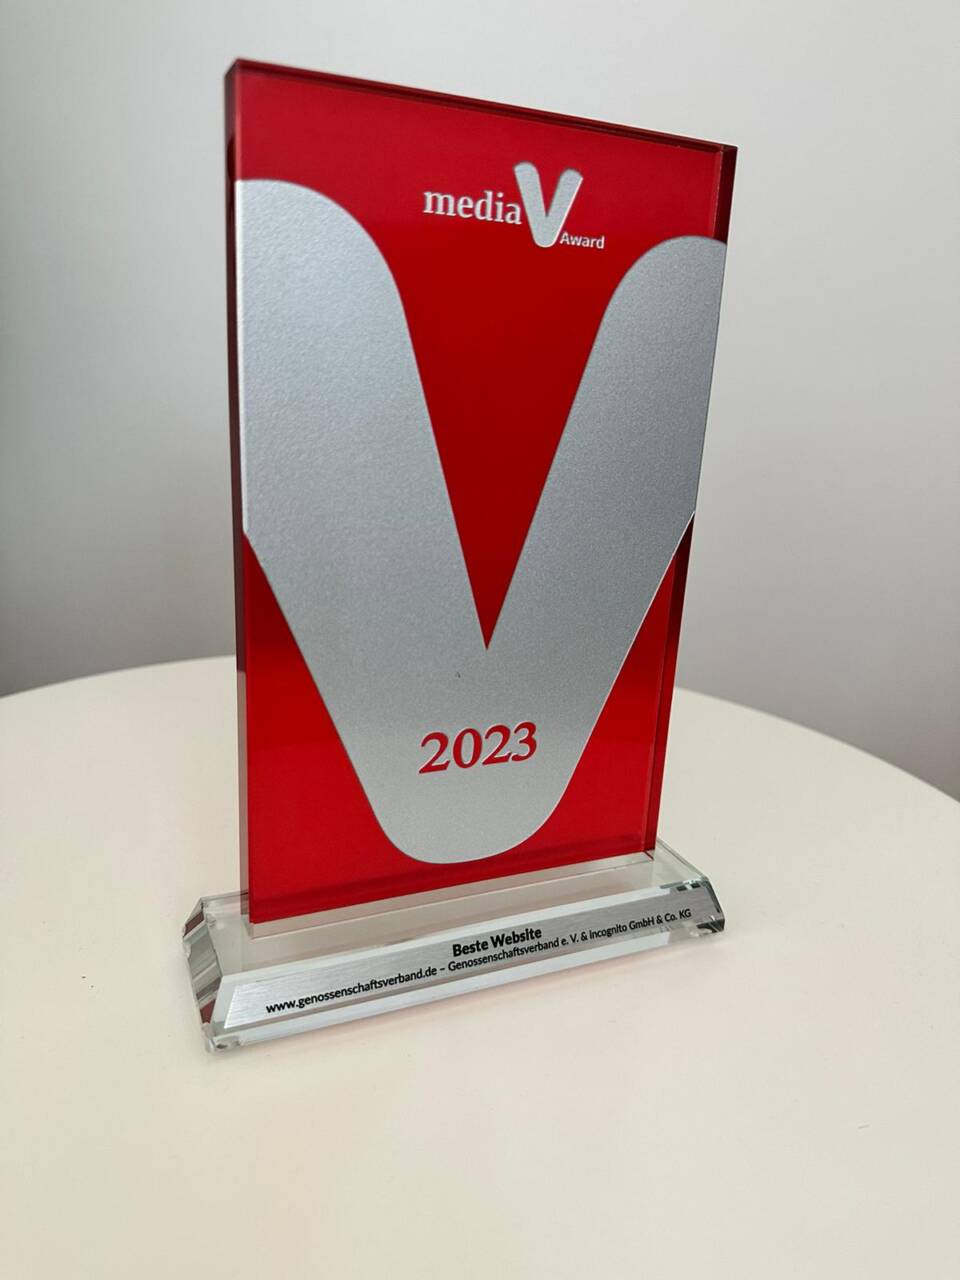 MediaV-Award "Beste Webseite" 2023